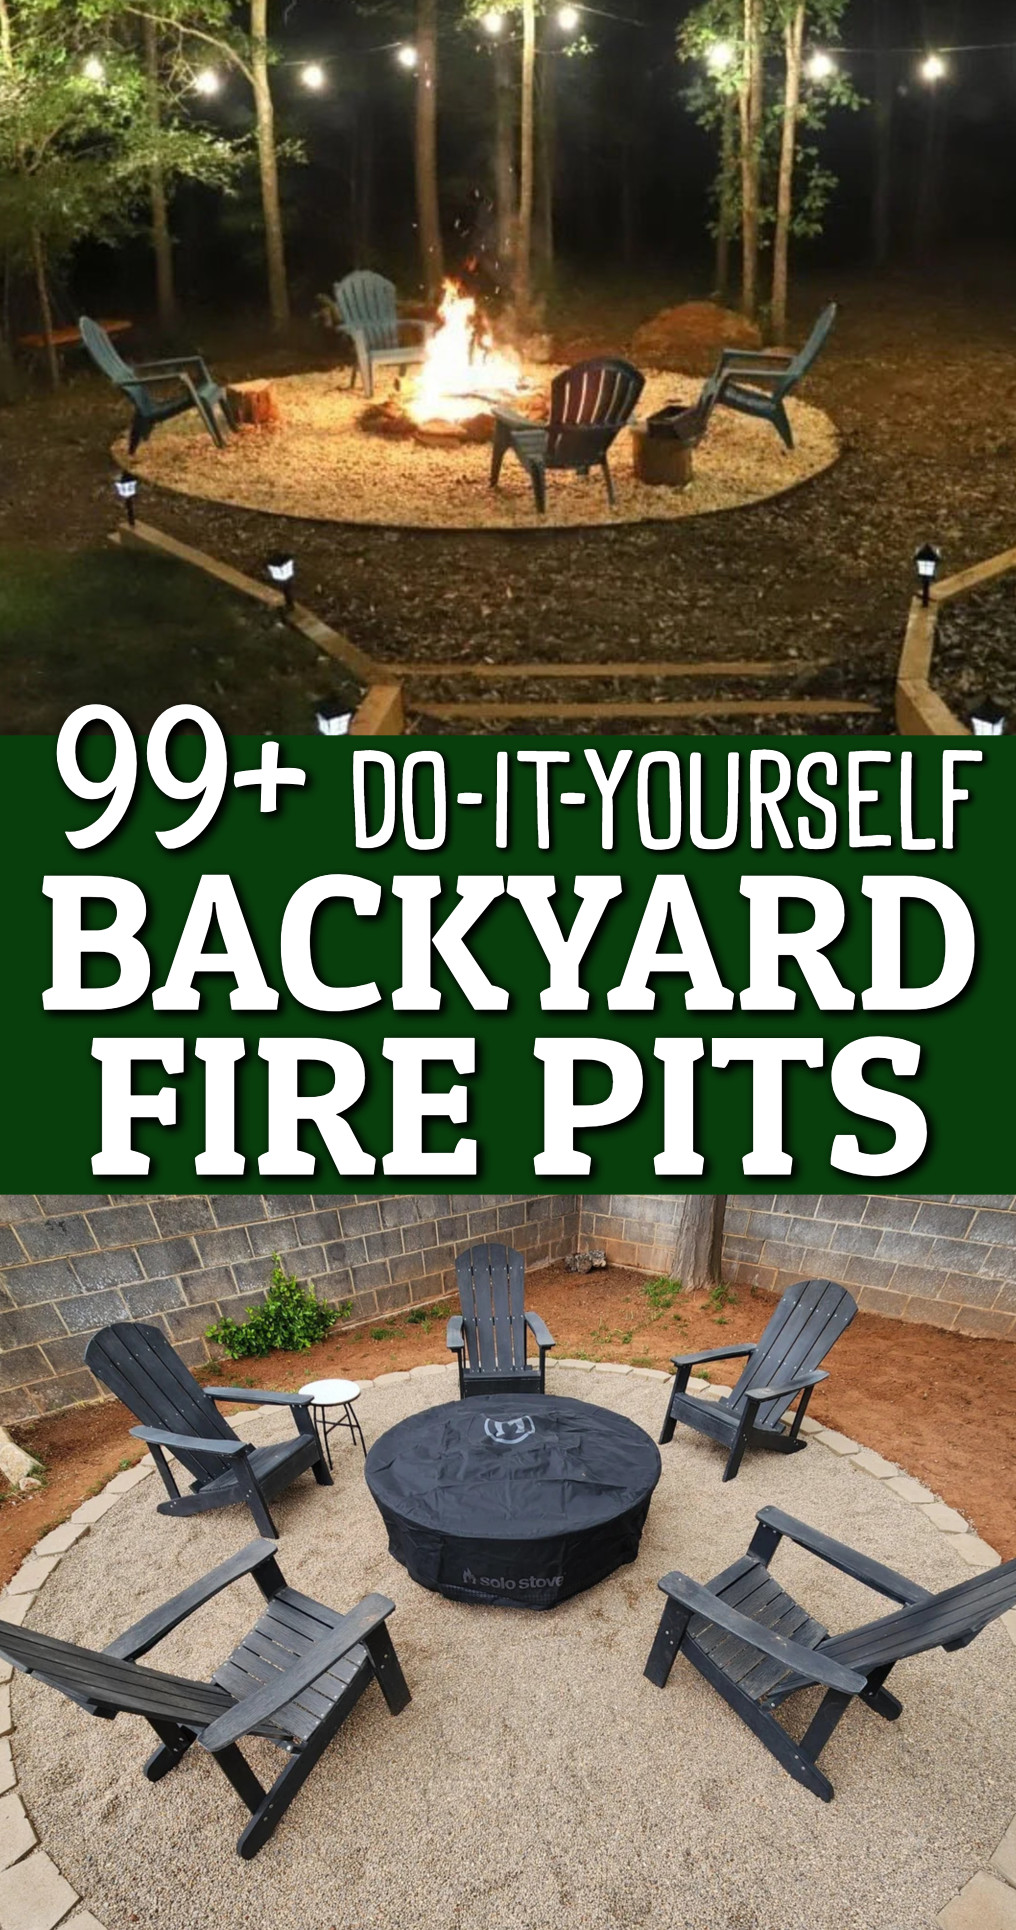 99+ Do-It-Yourself Backyard Fire Pits